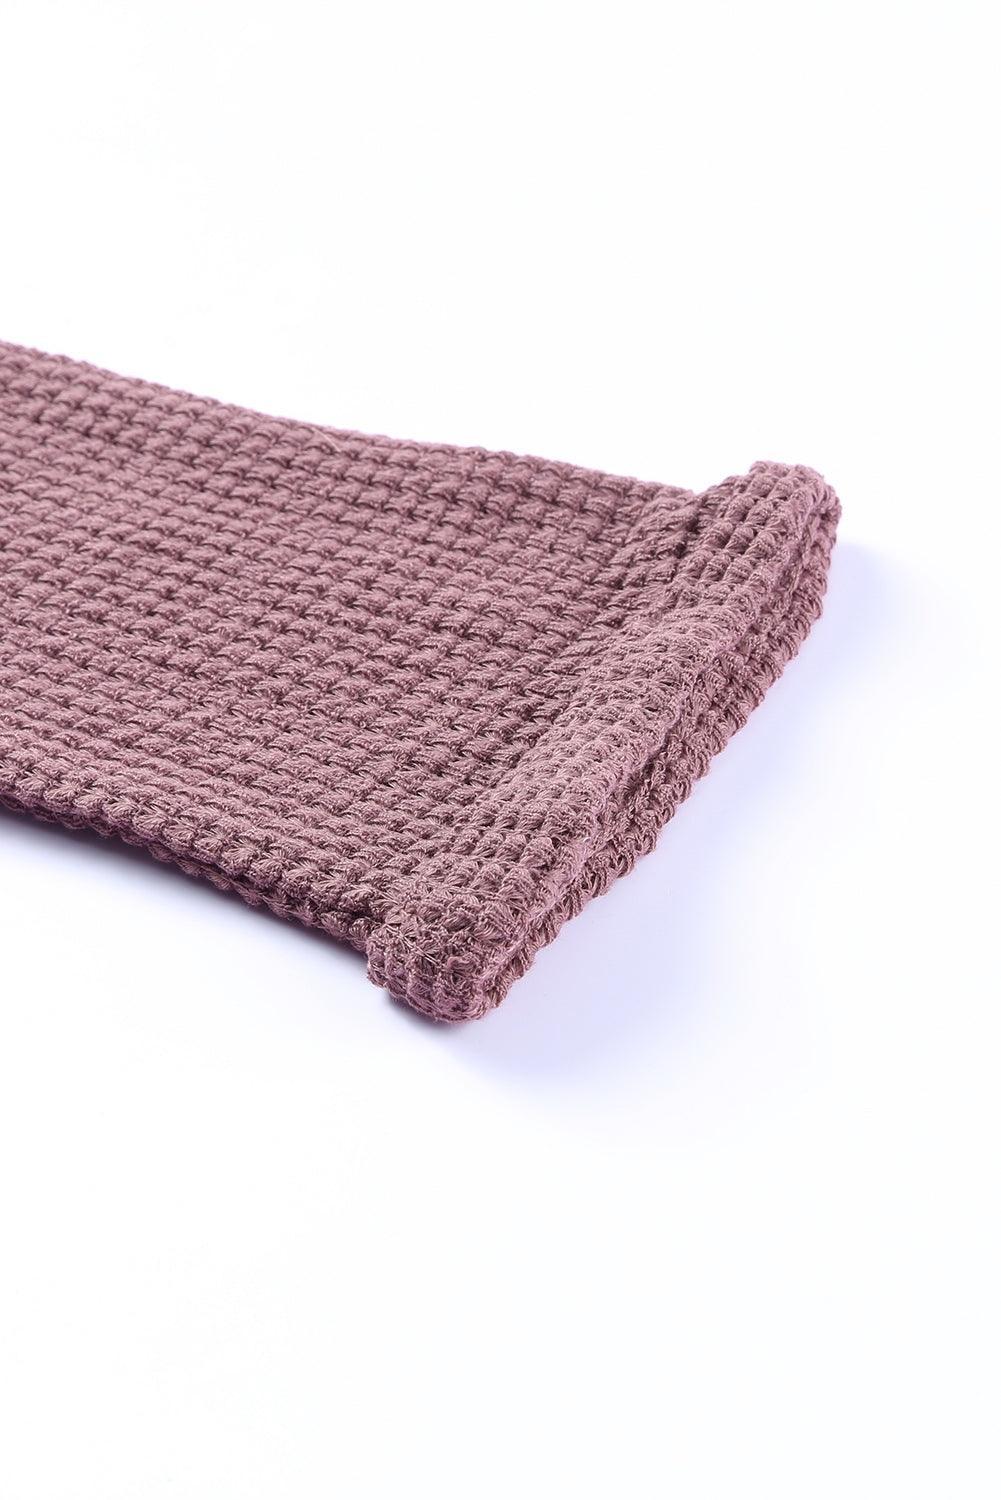 Purple Waffle Knit Split V Neck Drop Shoulder Long Sleeve Top - Ninonine